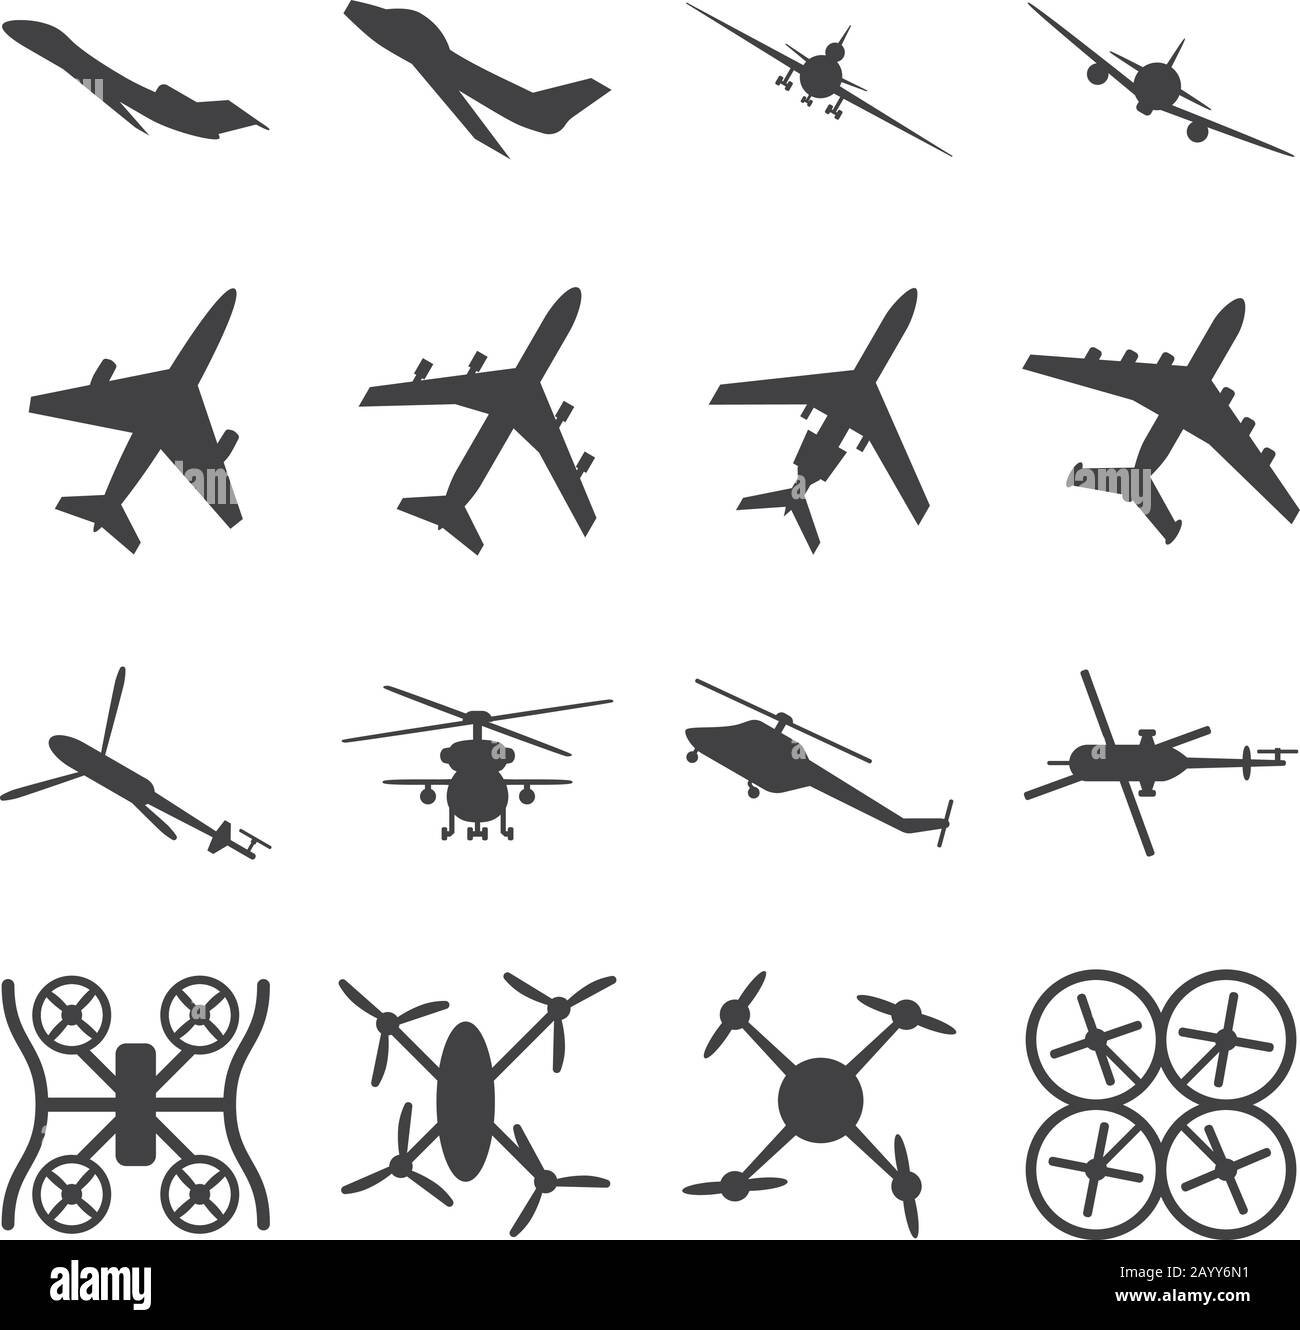 Aerei, elicotteri, droni icone vettoriali nere. Set di aerei quadrocopte e elicottero. Illustrazione di aerei militari Illustrazione Vettoriale